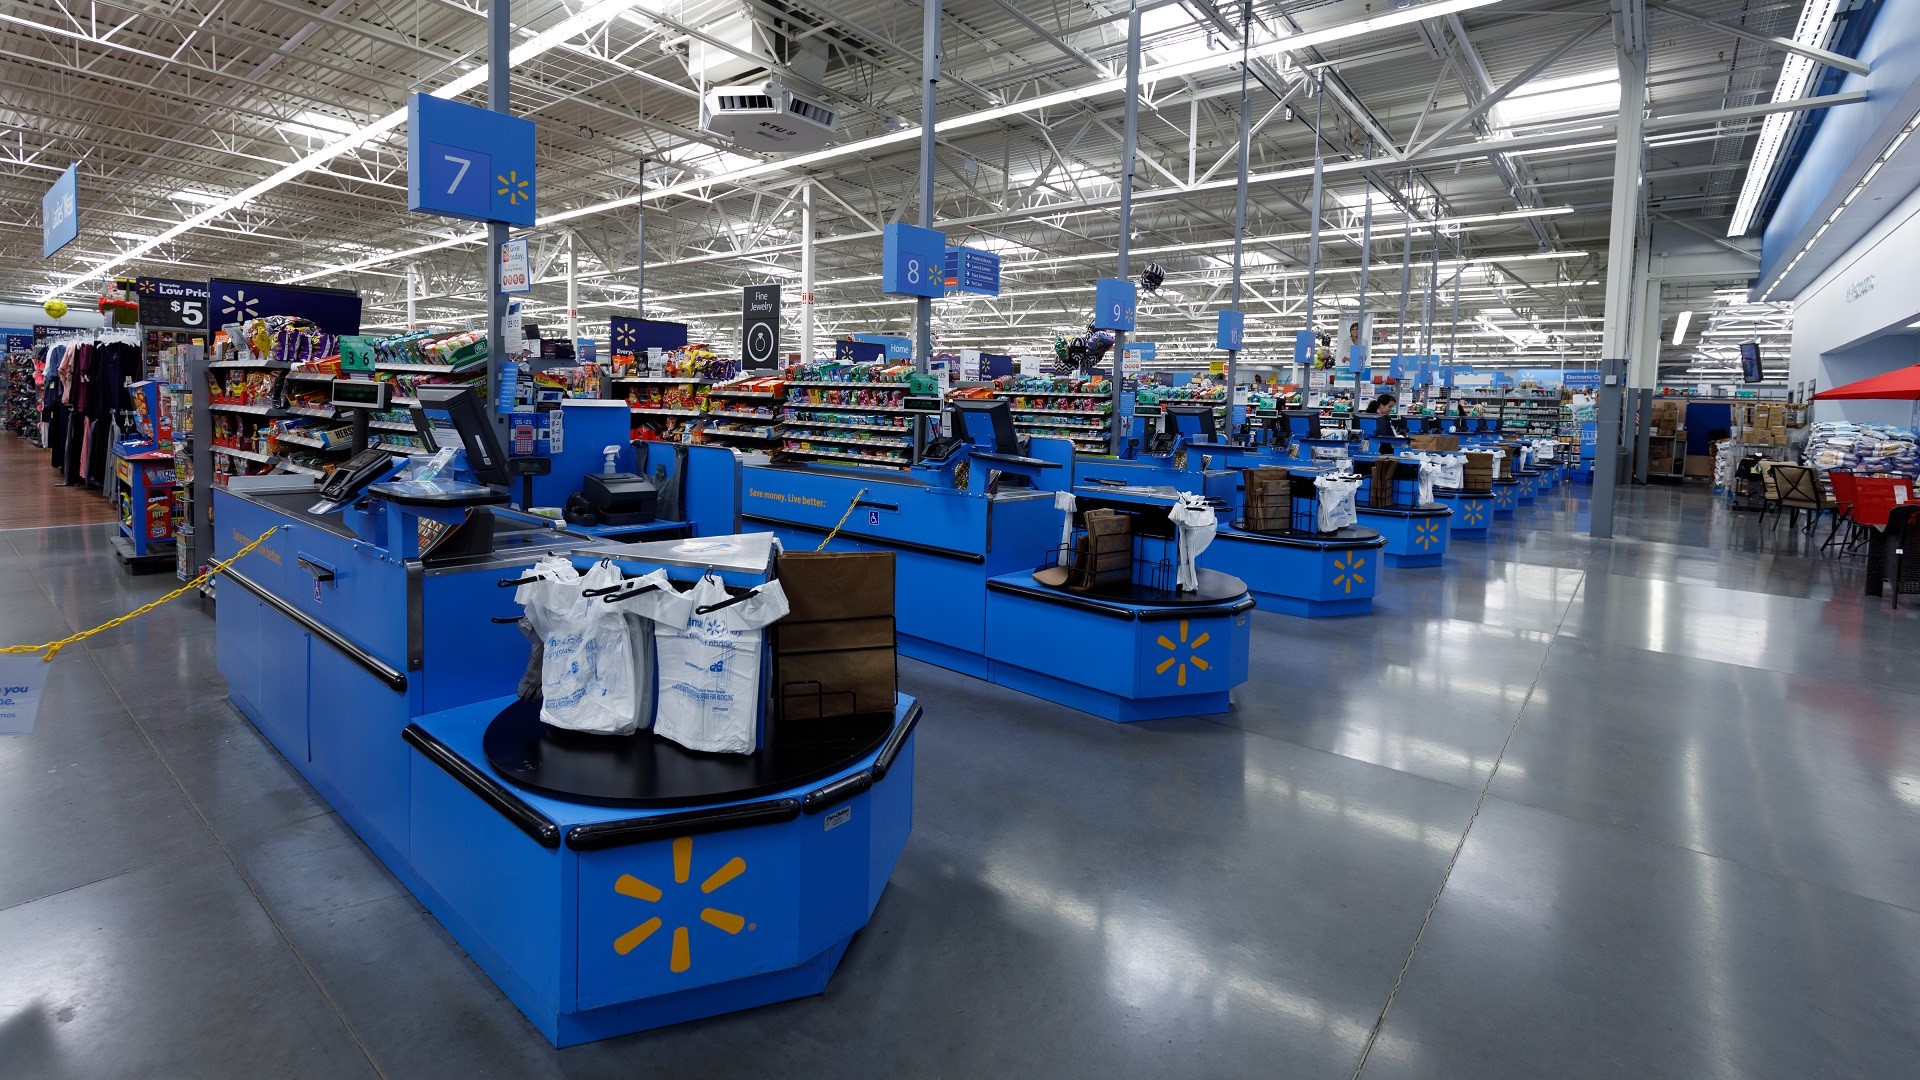 Should You Buy Groceries at Walmart? | GOBankingRates